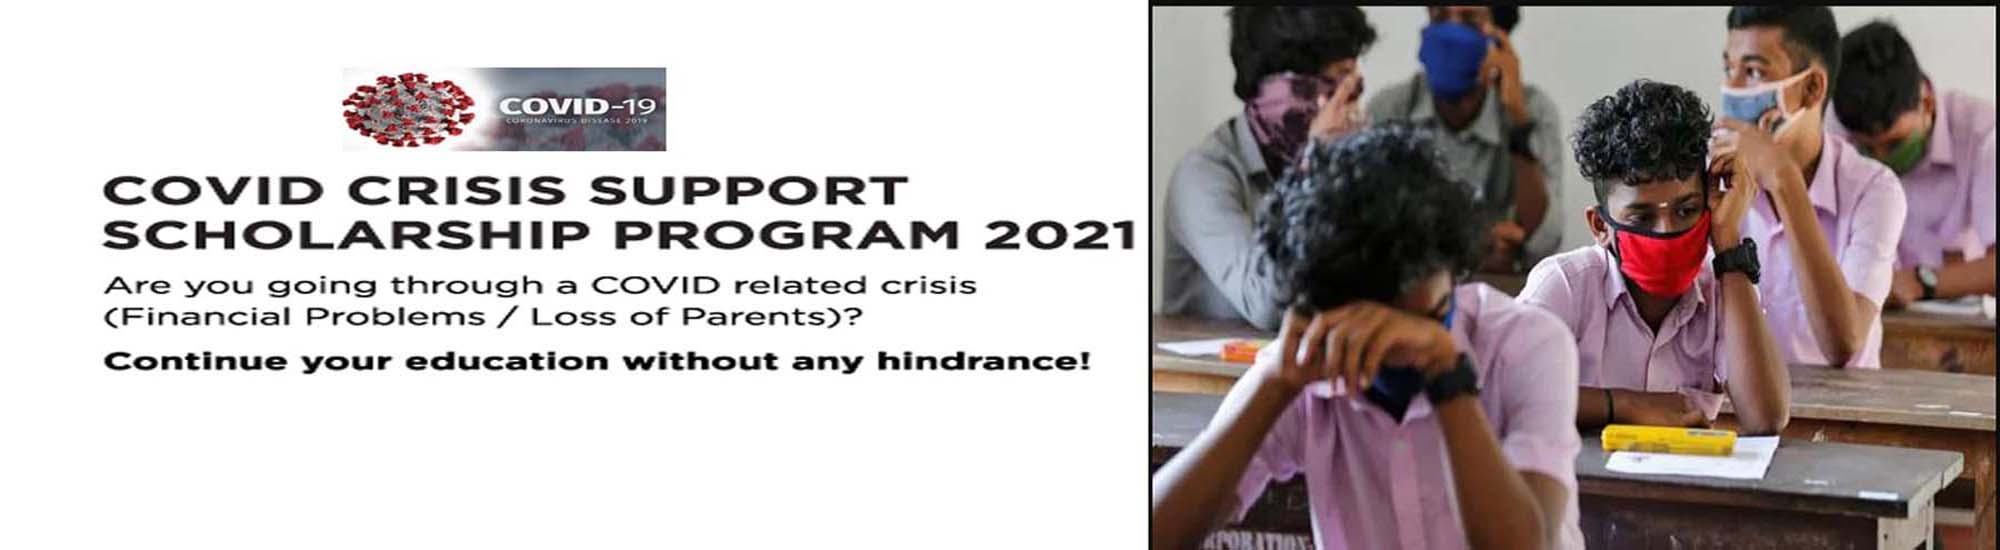 COVID Crisis Support Scholarship Program 2021